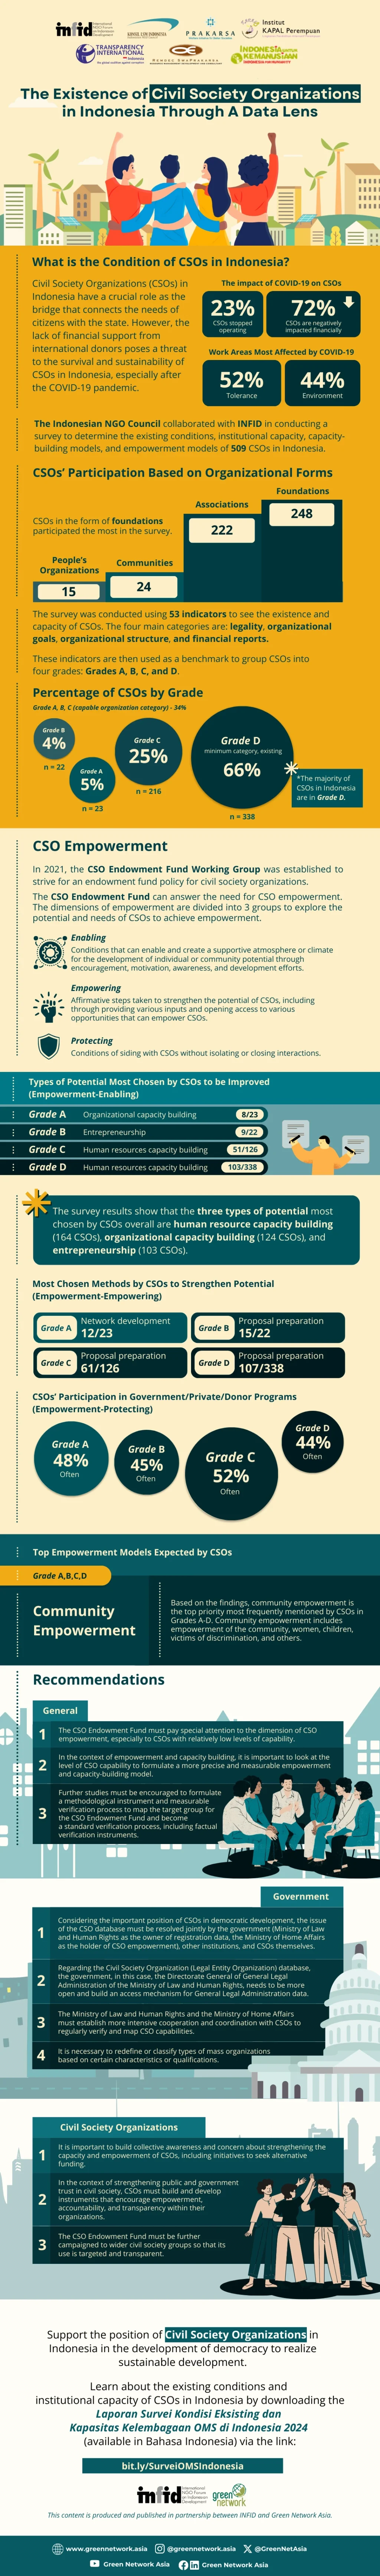 civil society organization infographic